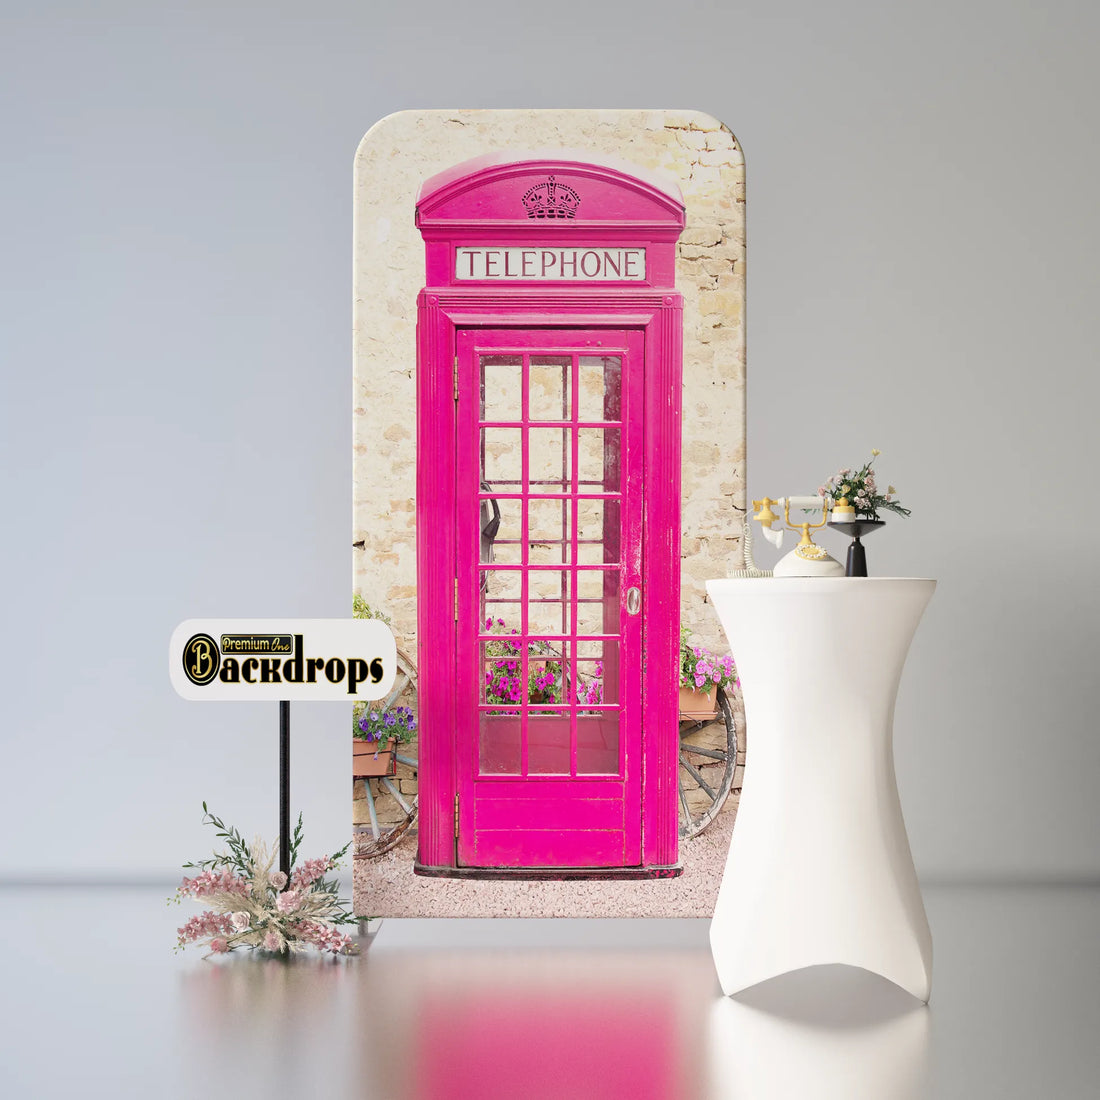 Telephone Booth Design 31